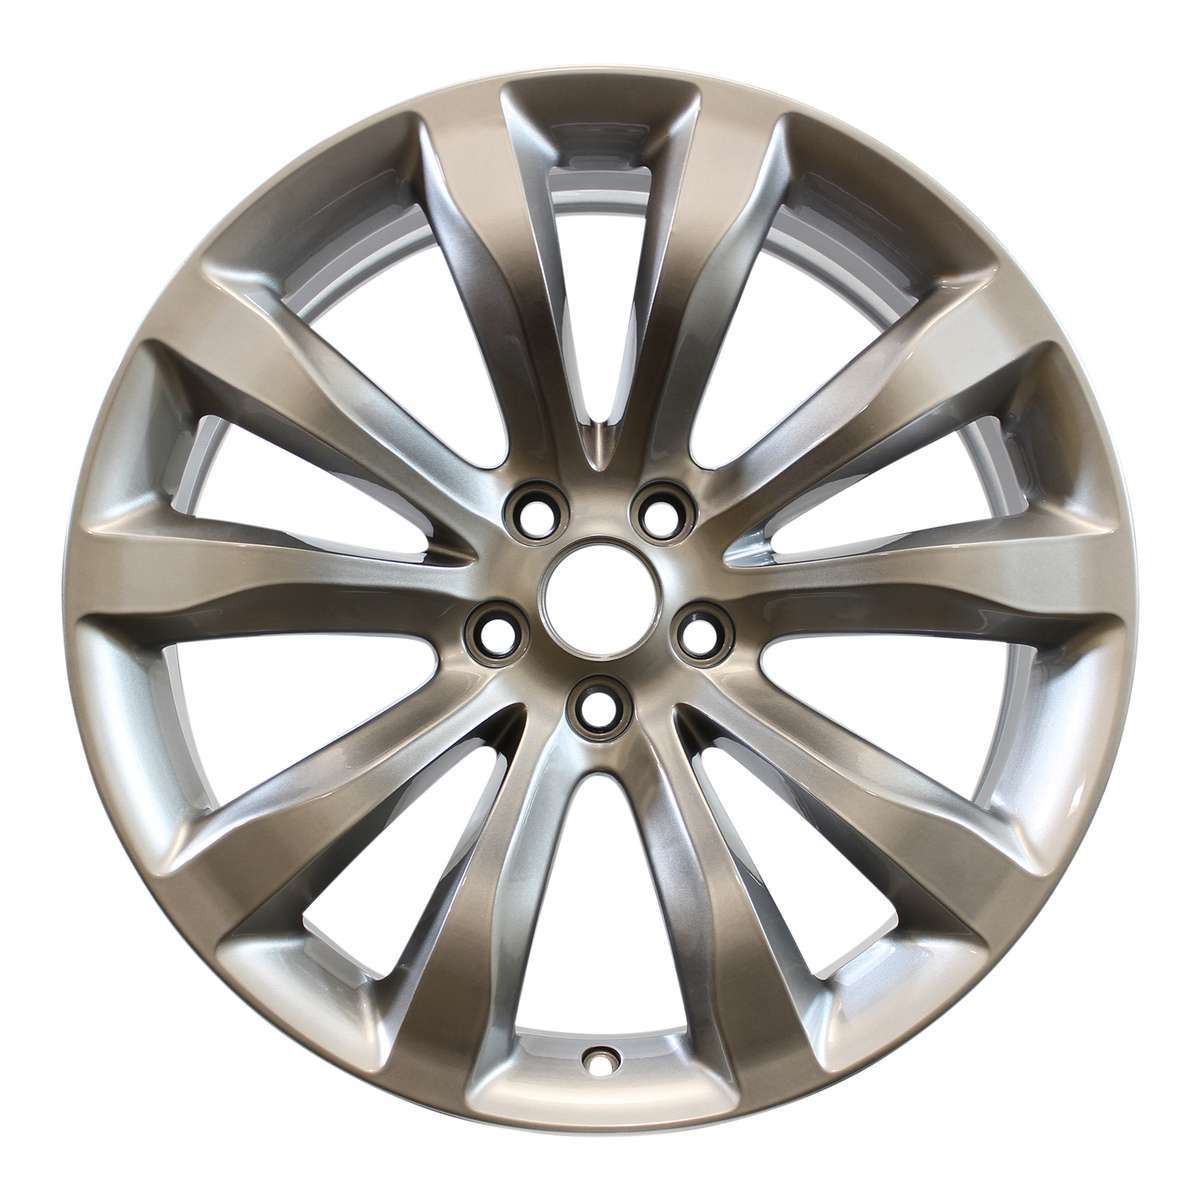 2014 Chrysler 300 20" OEM Wheel Rim W2540H